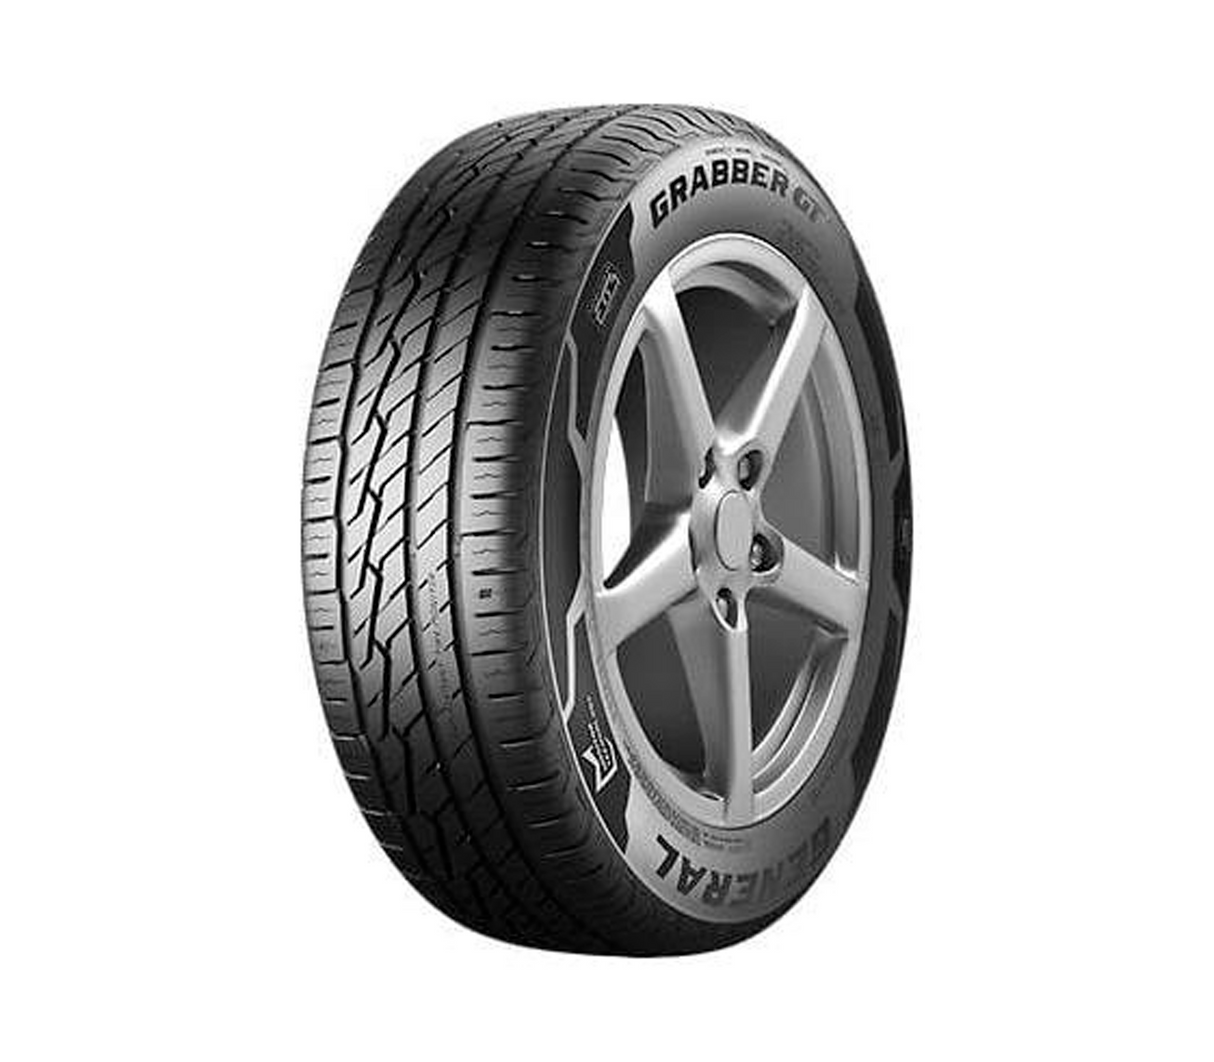 Neumático 215/60R17 96H Grabber Gt Plus General Tires